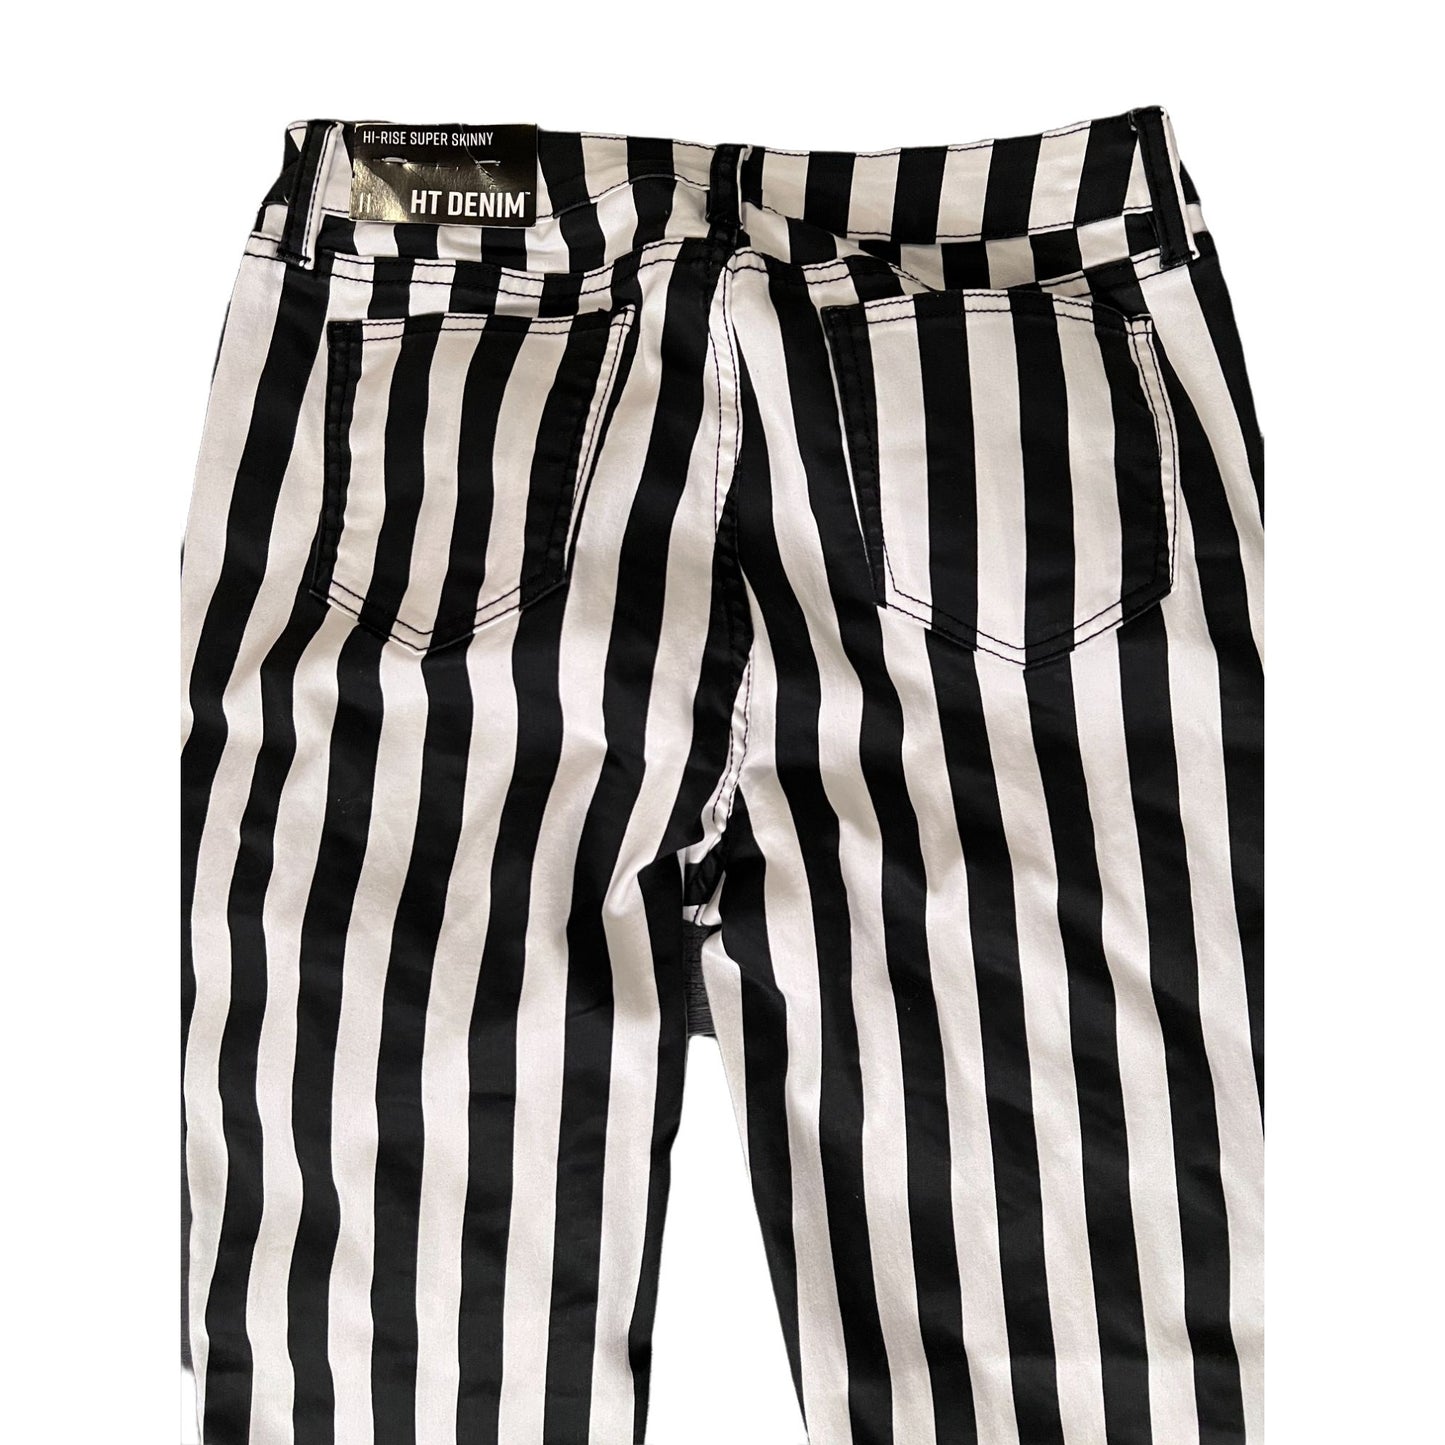 Black & White Striped Jeans - 9/10